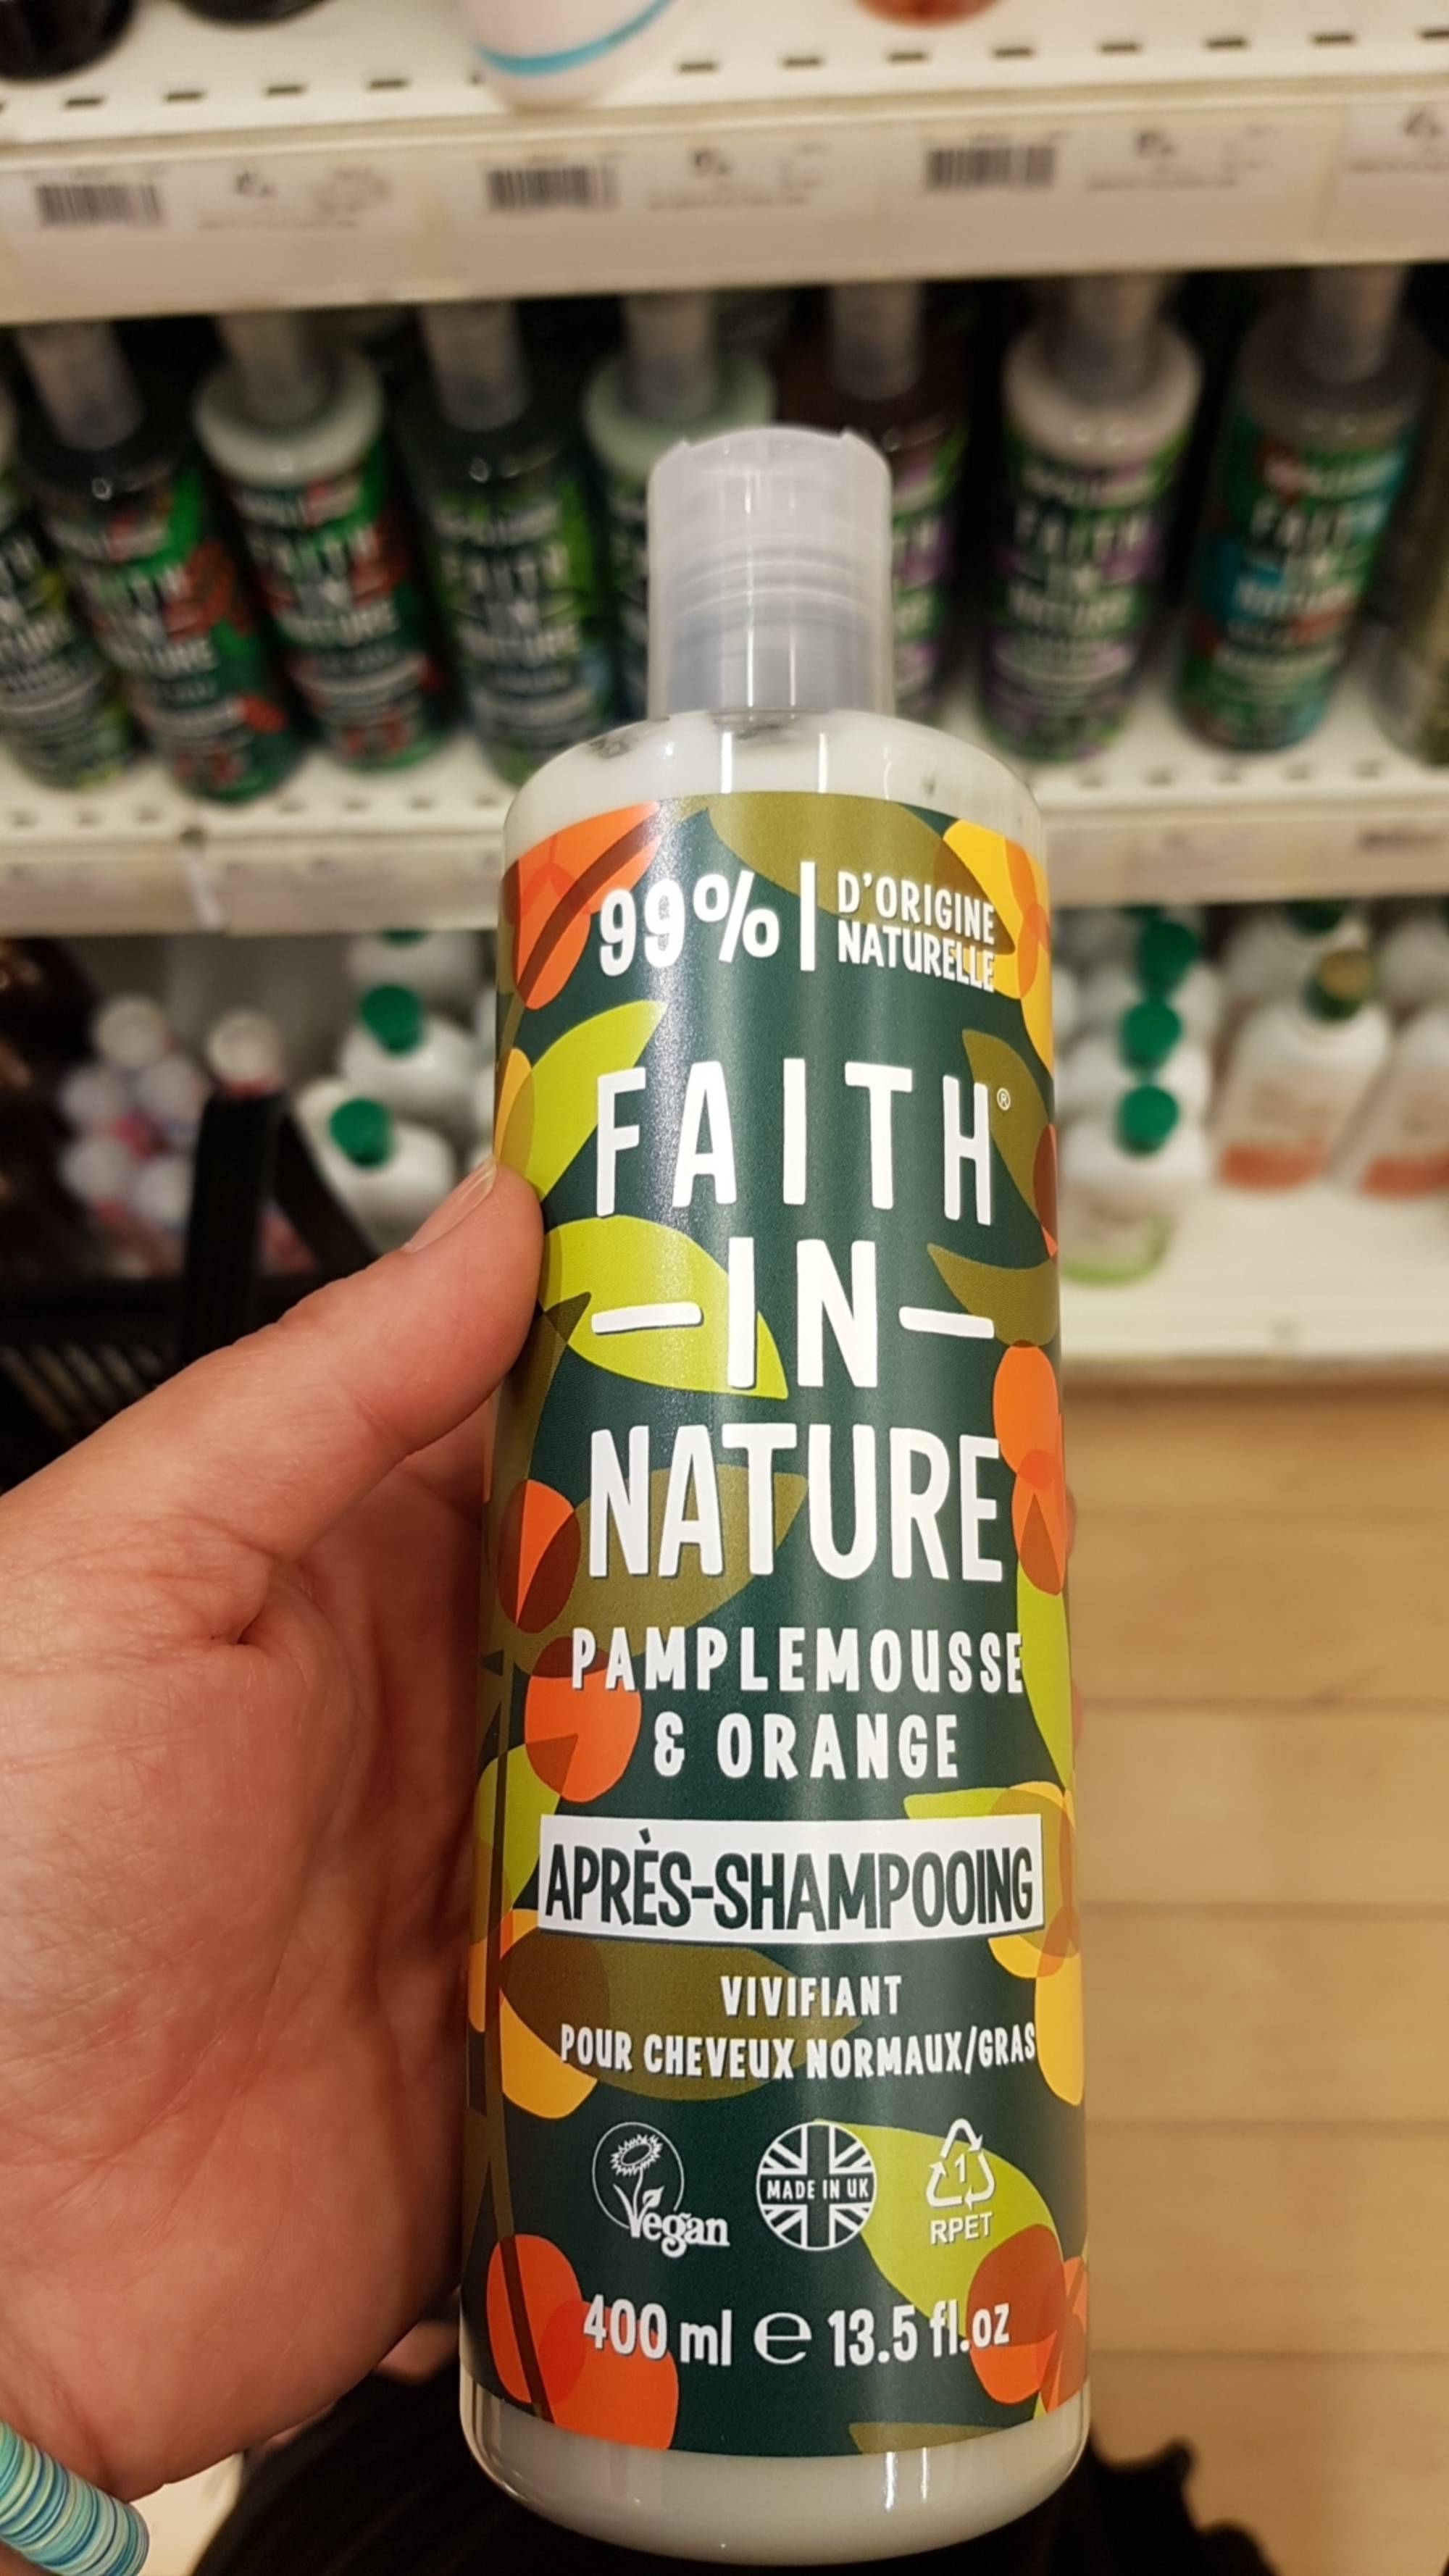 FAITH IN NATURE - Pamplemousse & orange - Après-shampooing